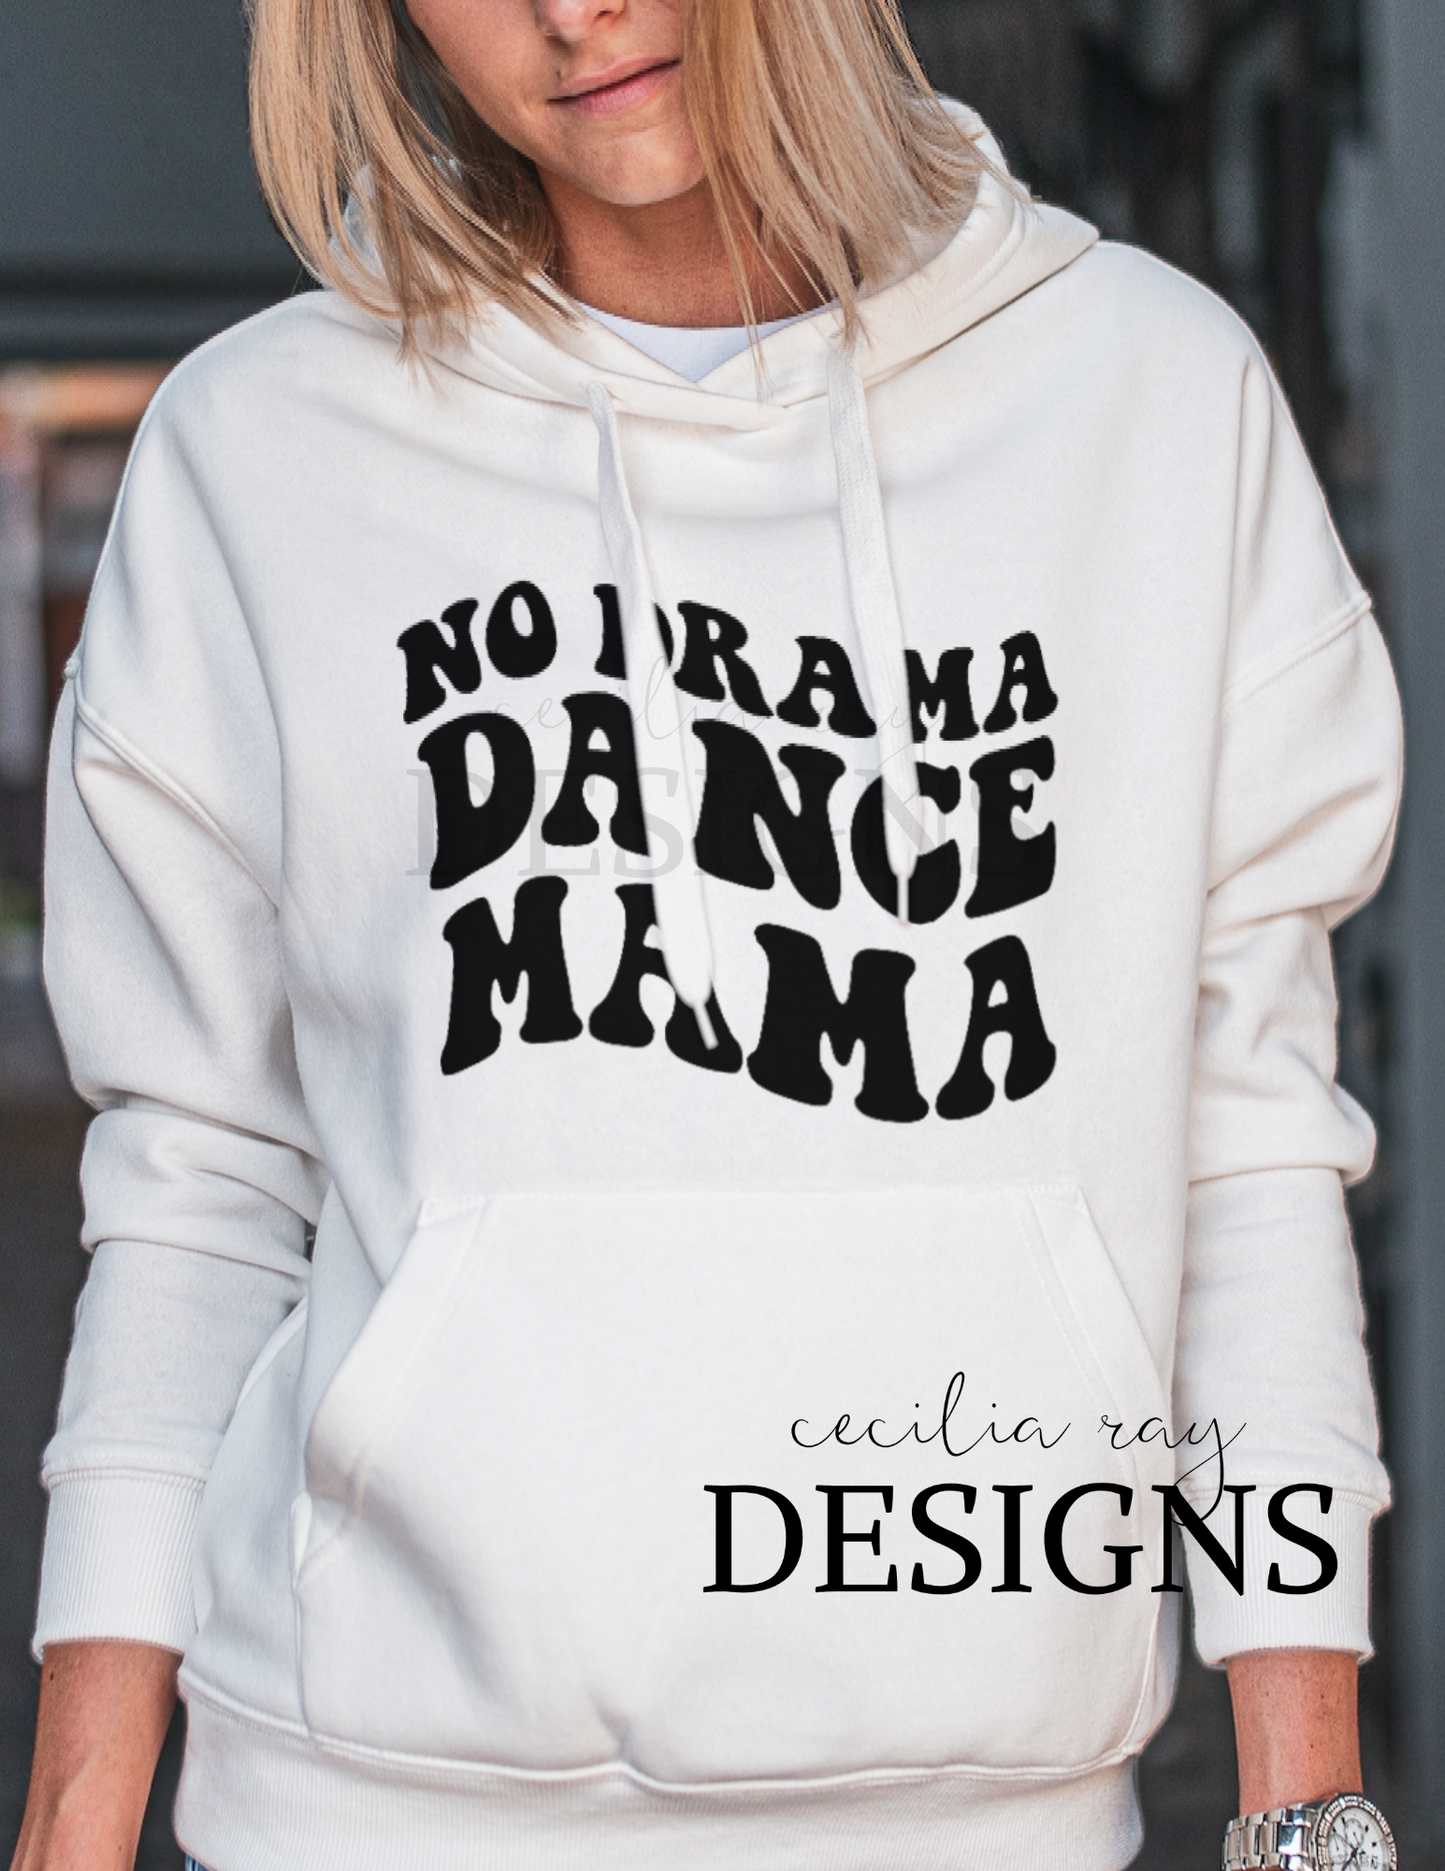 No Drama Dance Mama Sweatshirt or Hoodie